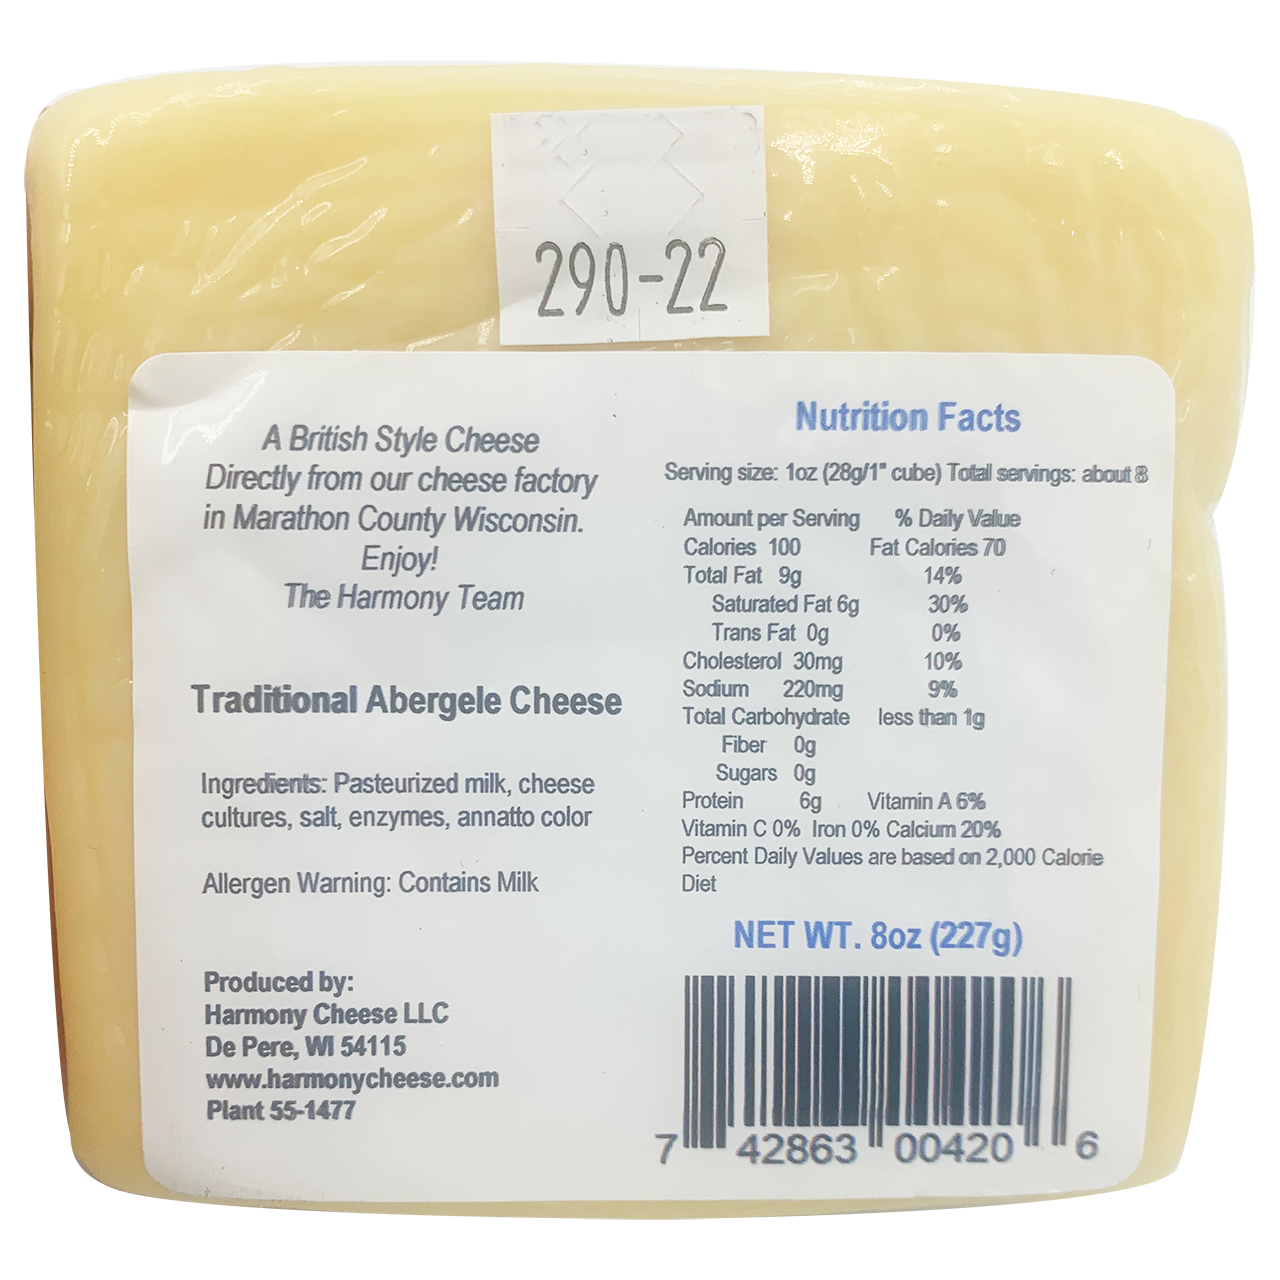 Abergele Cheese